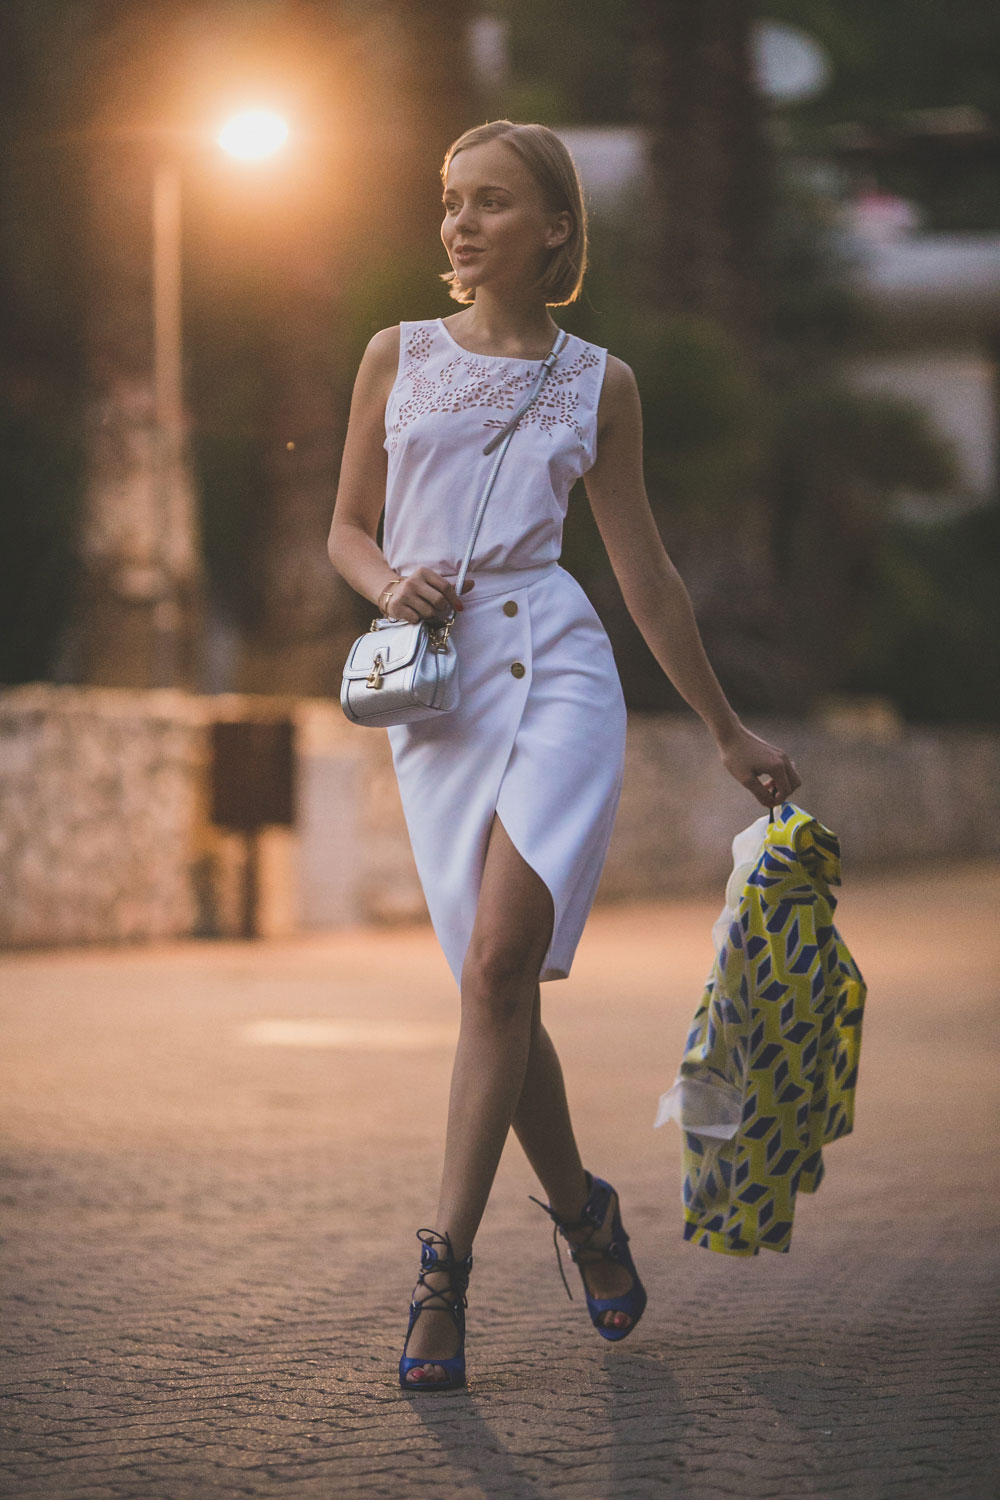 darya-kamalova-thecablook-fashion-lifestyle-blogger-from-thecablook-com-in-puglia-gargano-baia-dei-faraglioni-allegro-italia-in-zara-white-skirt-dolce-gabbana-crossbody-bag-missguided-blue-sandals-1911